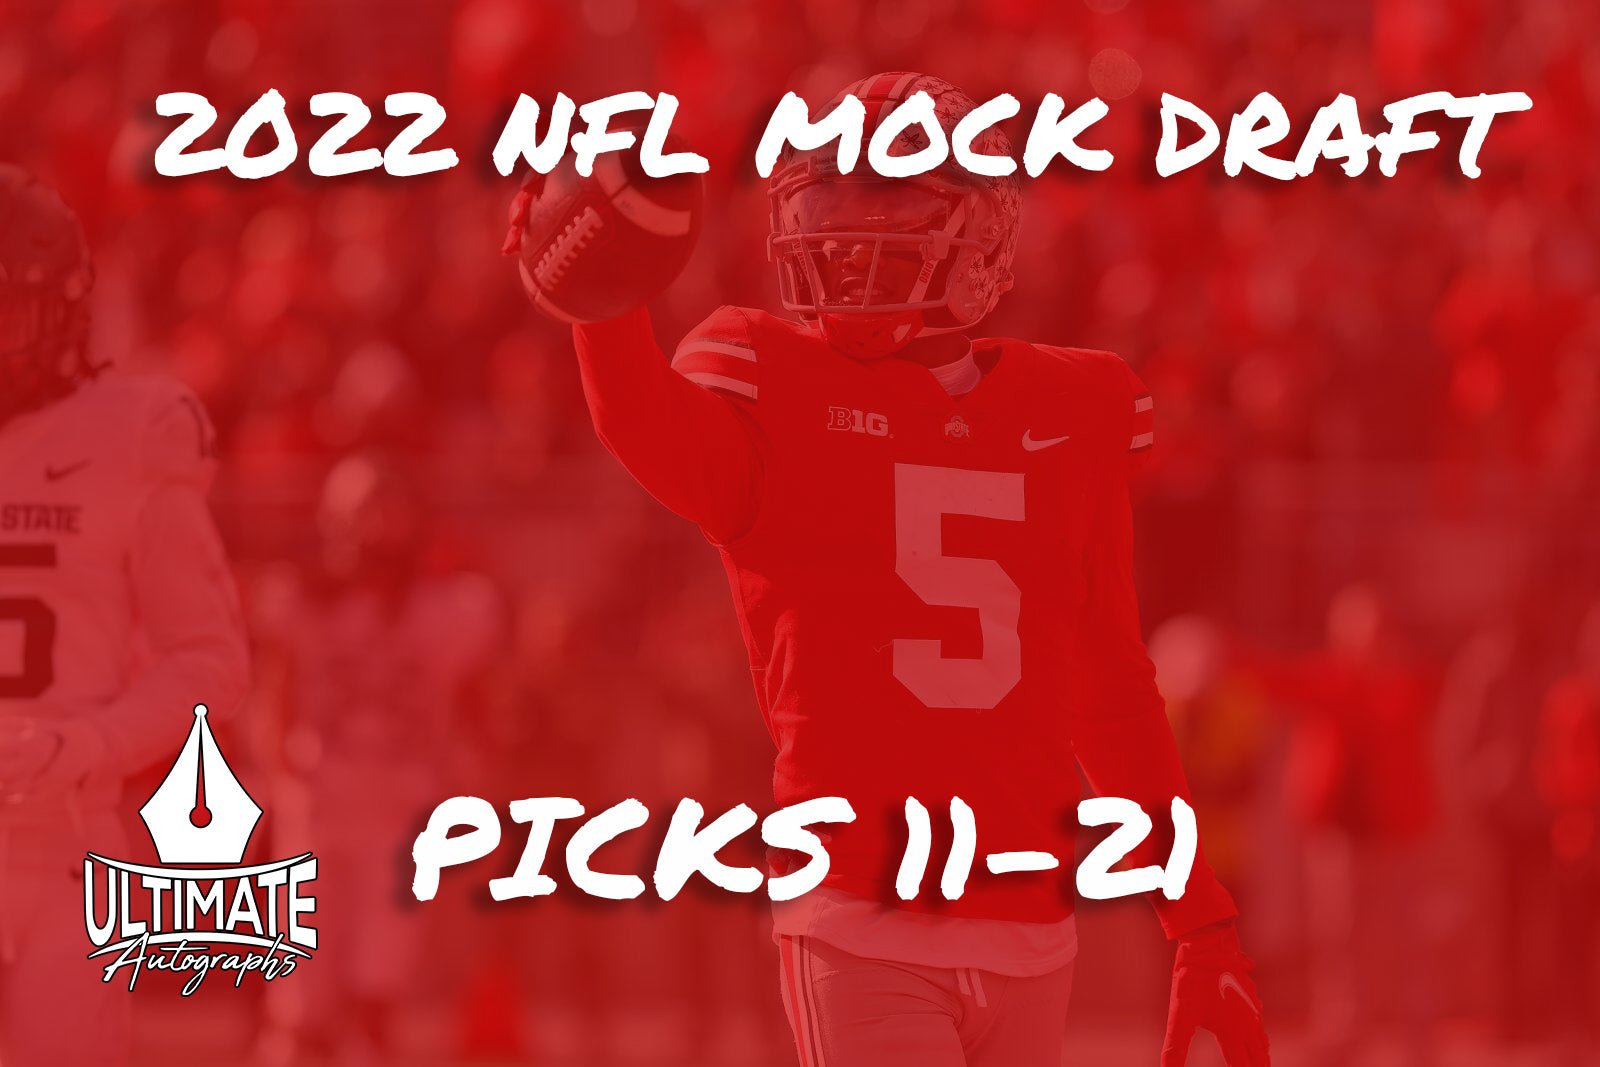 2022 NFL Mock Draft: Part 2